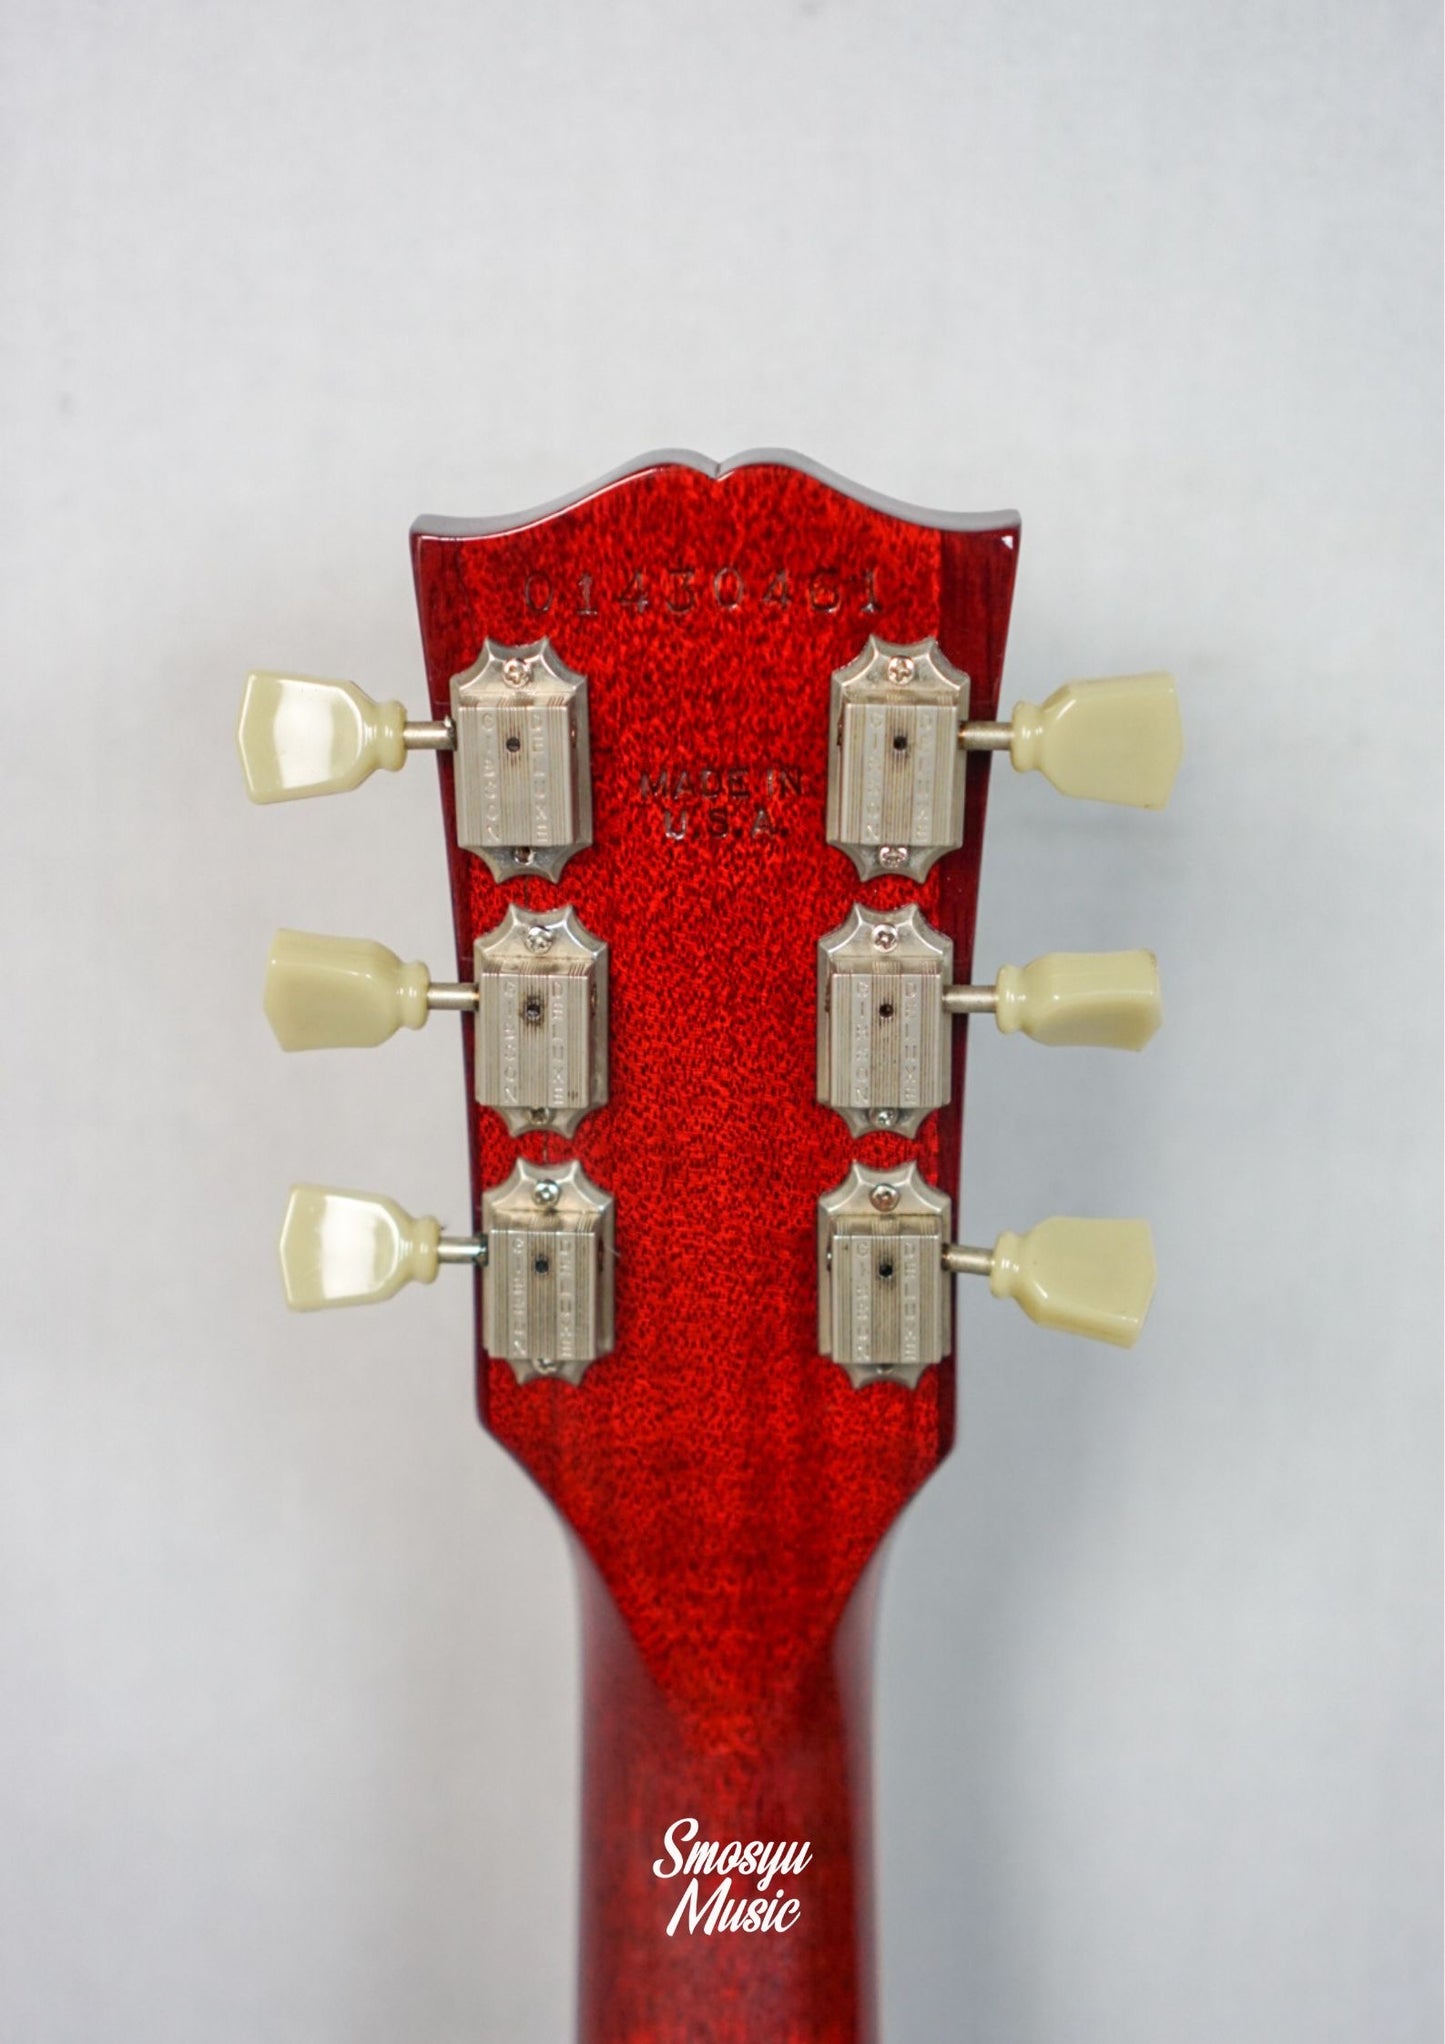 Gibson LesPaul Standard 2000